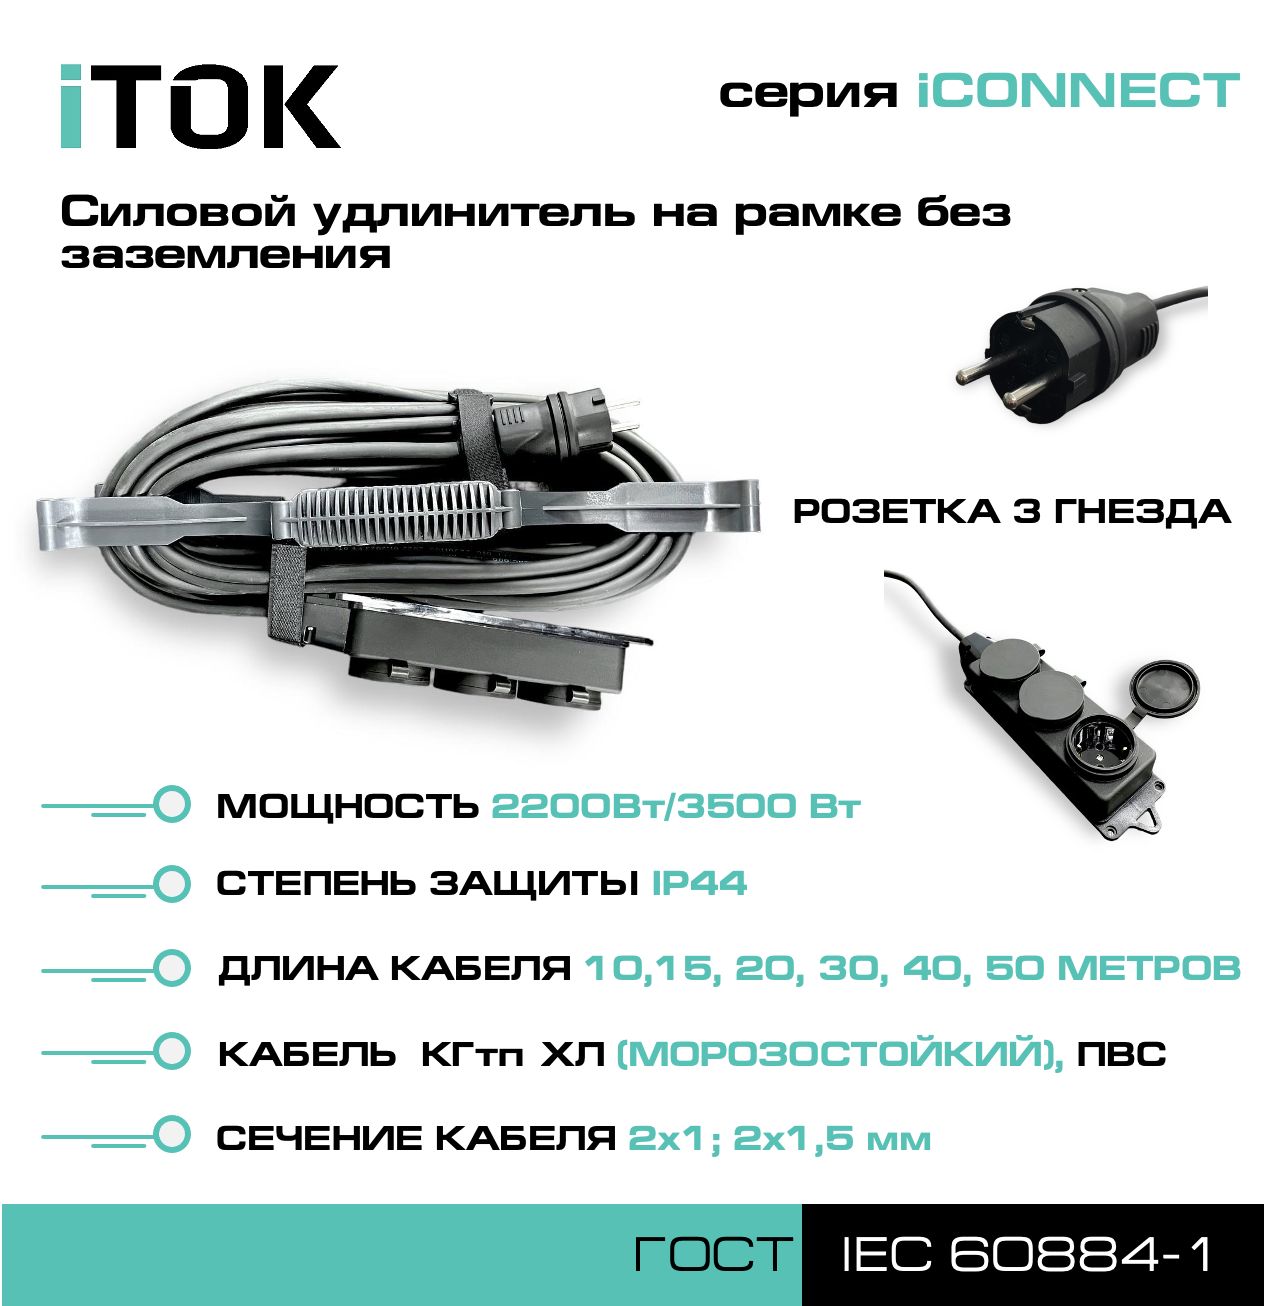 Удлинитель на рамке без земли серии iTOK iCONNECT КГтп-ХЛ 2х1,5 мм 3 гнезда IP44 15 м